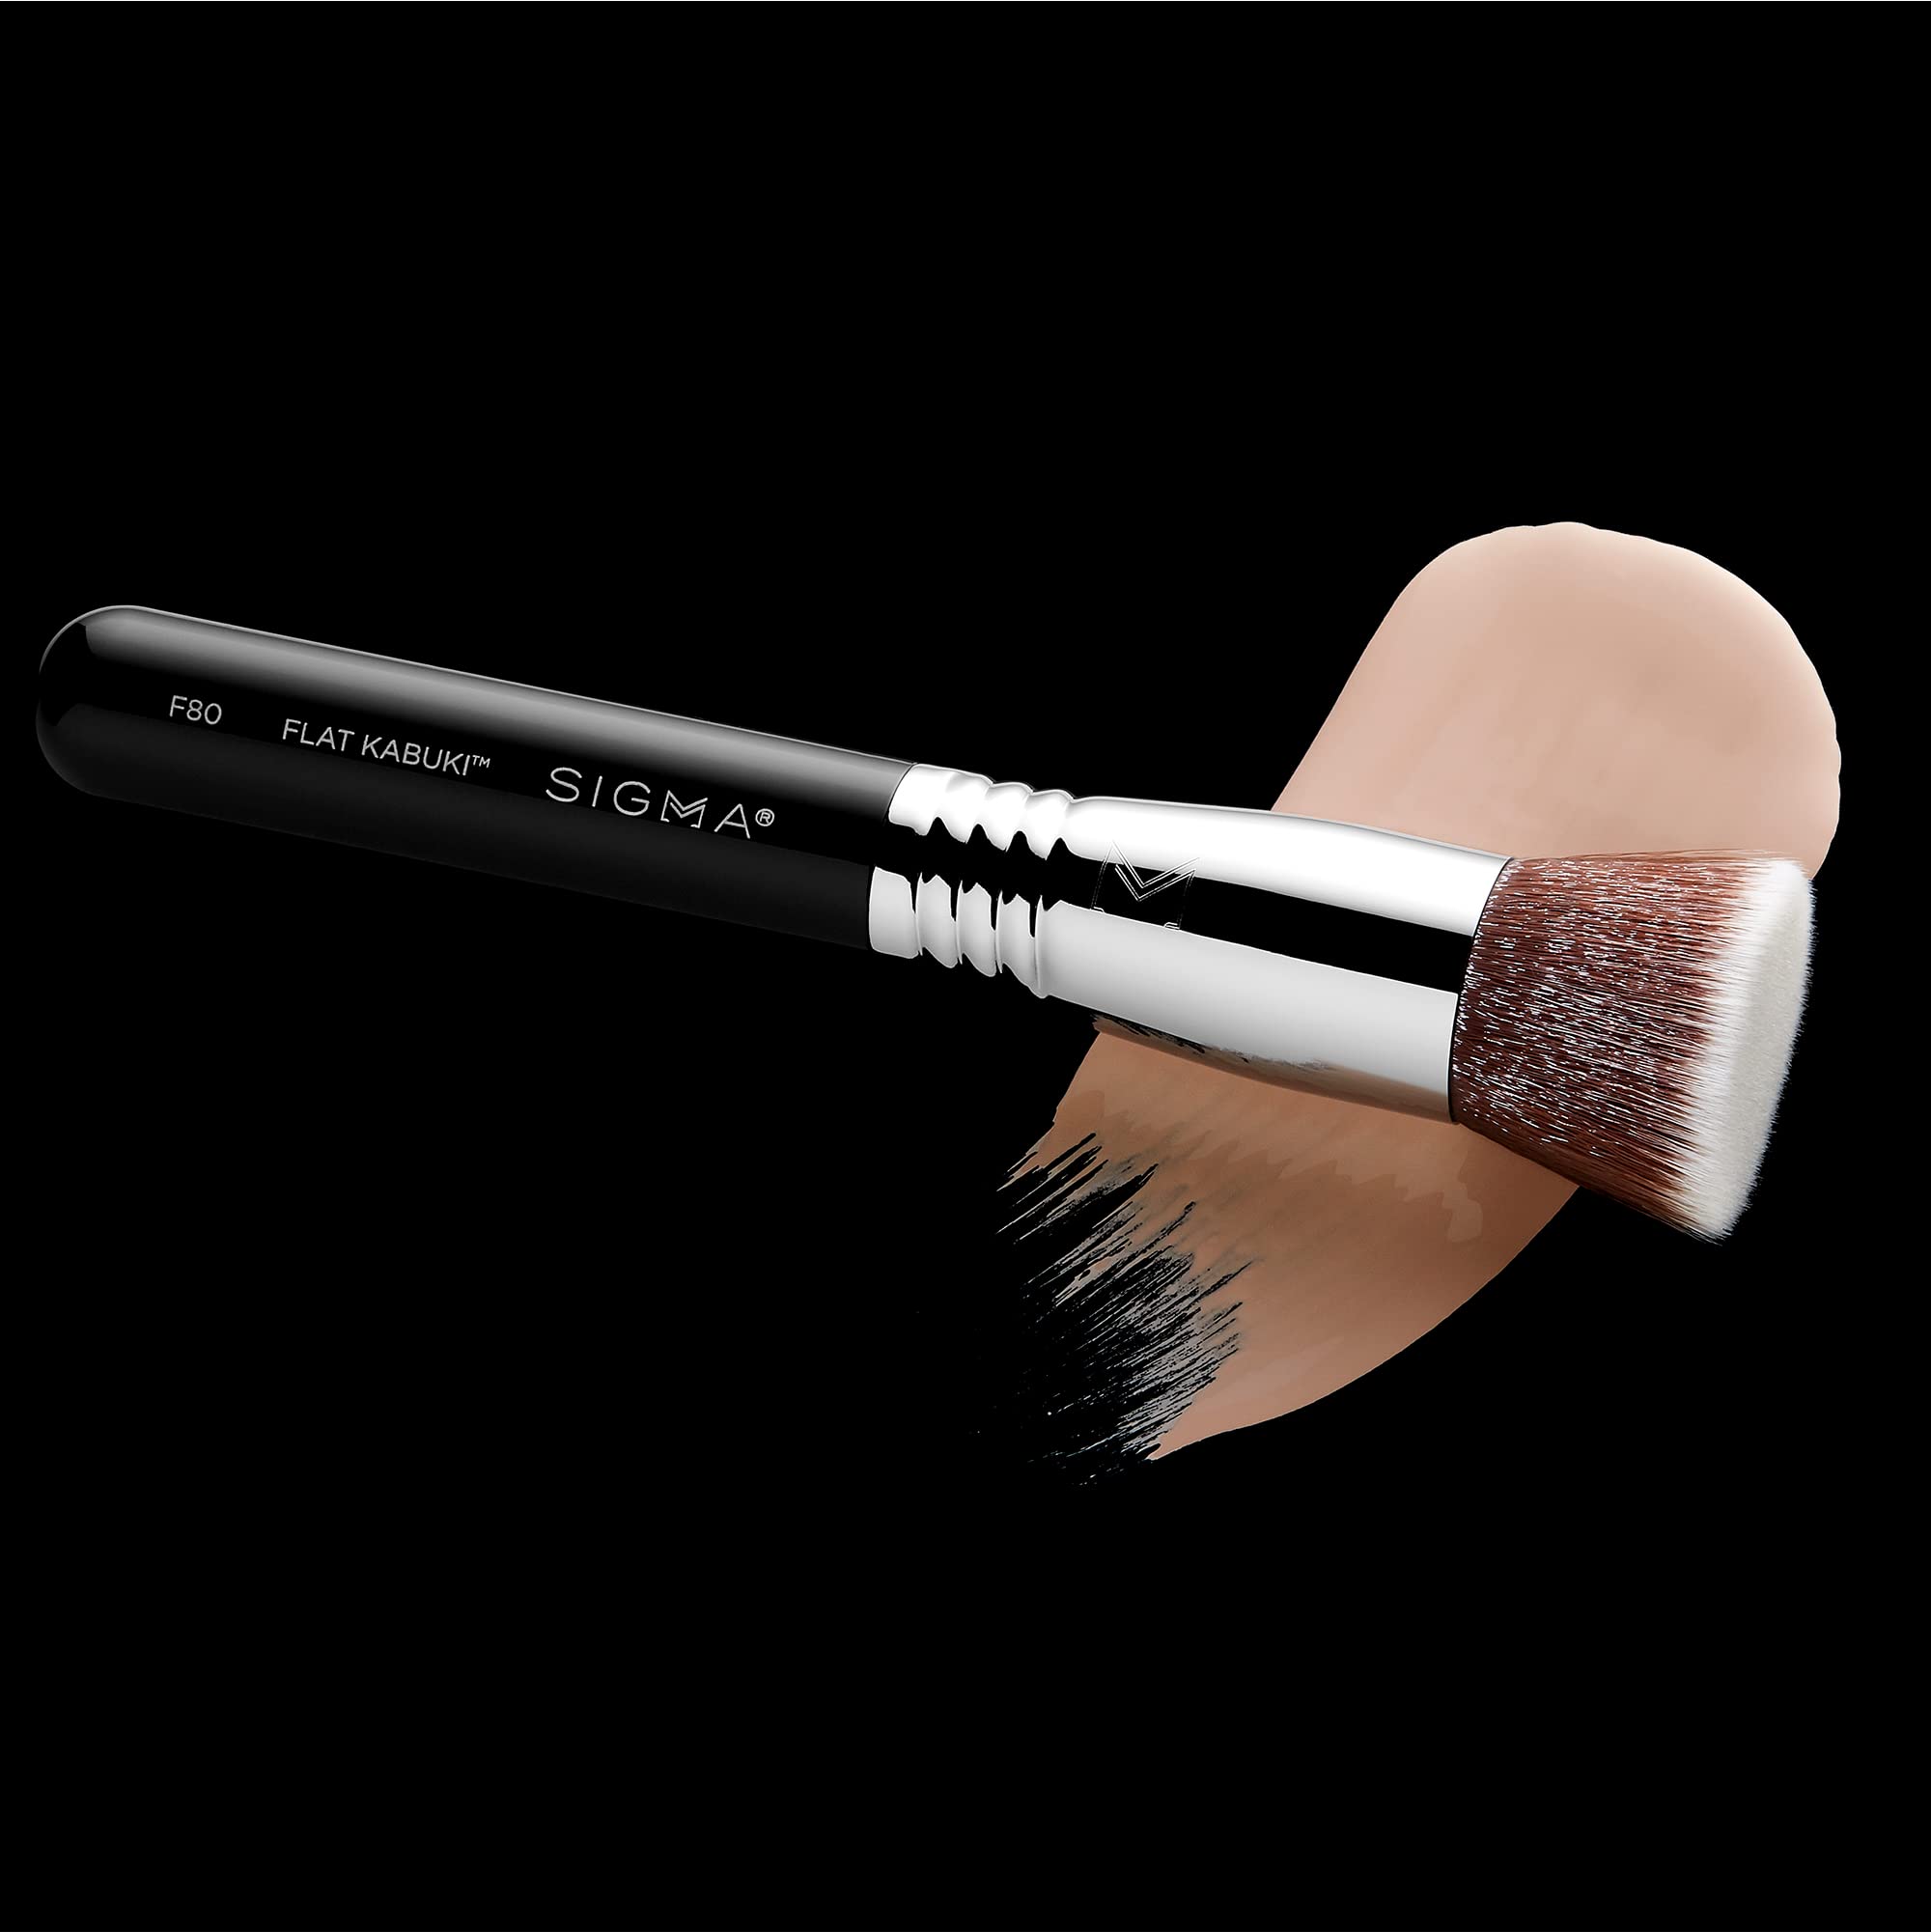 Sigma Beauty F80 Flat Kabuki Brush – Flat Top Kabuki Foundation Brush and Professional Grade Makeup Brush w/Ultra-Soft Fibers for Blending Liquid & Cream Makeup Products (Black, 1pc)